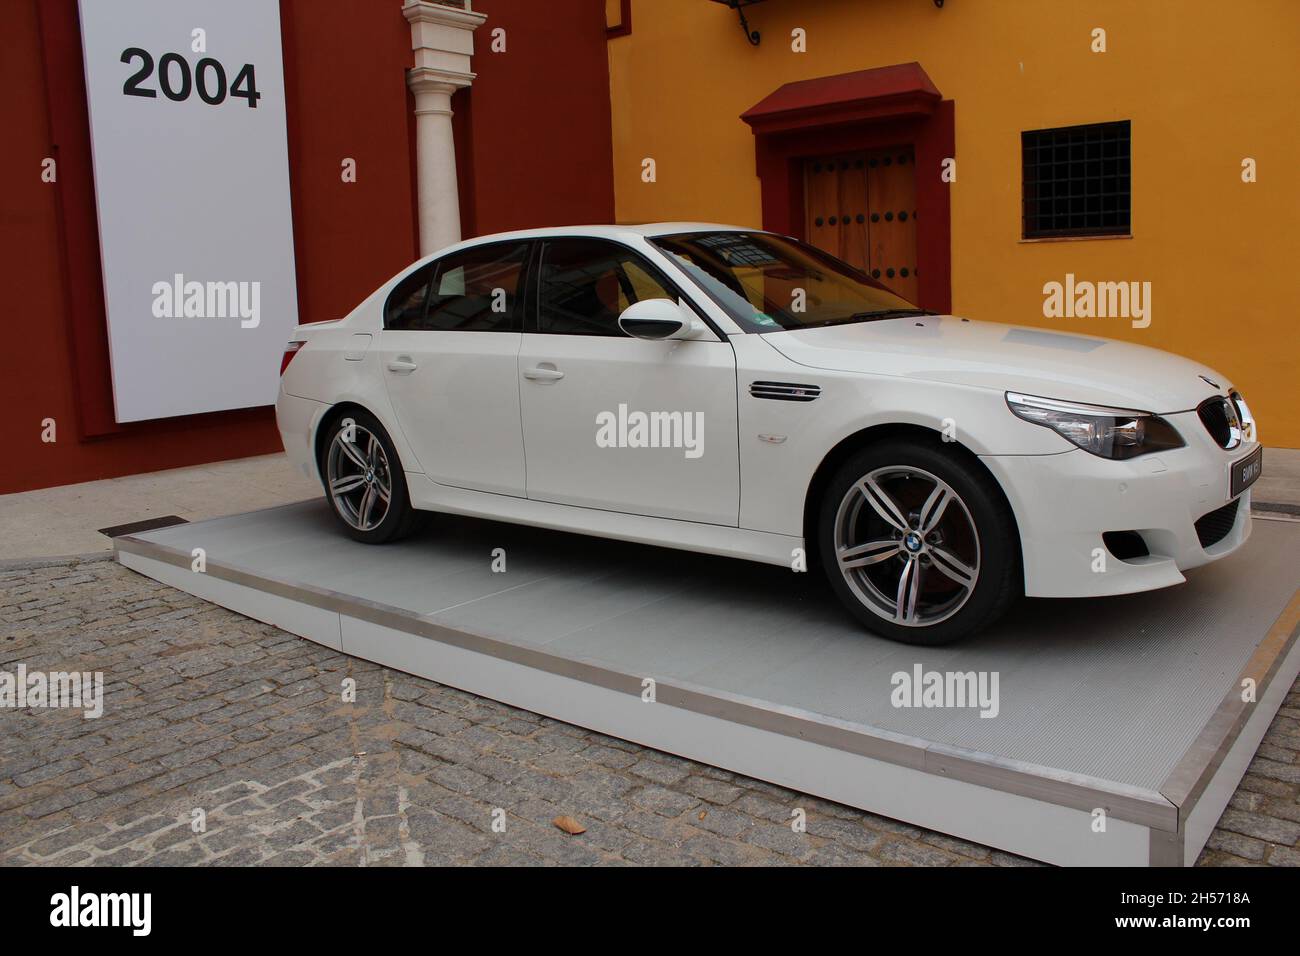 BMW M5 (E60): Performance, Price, and Photos